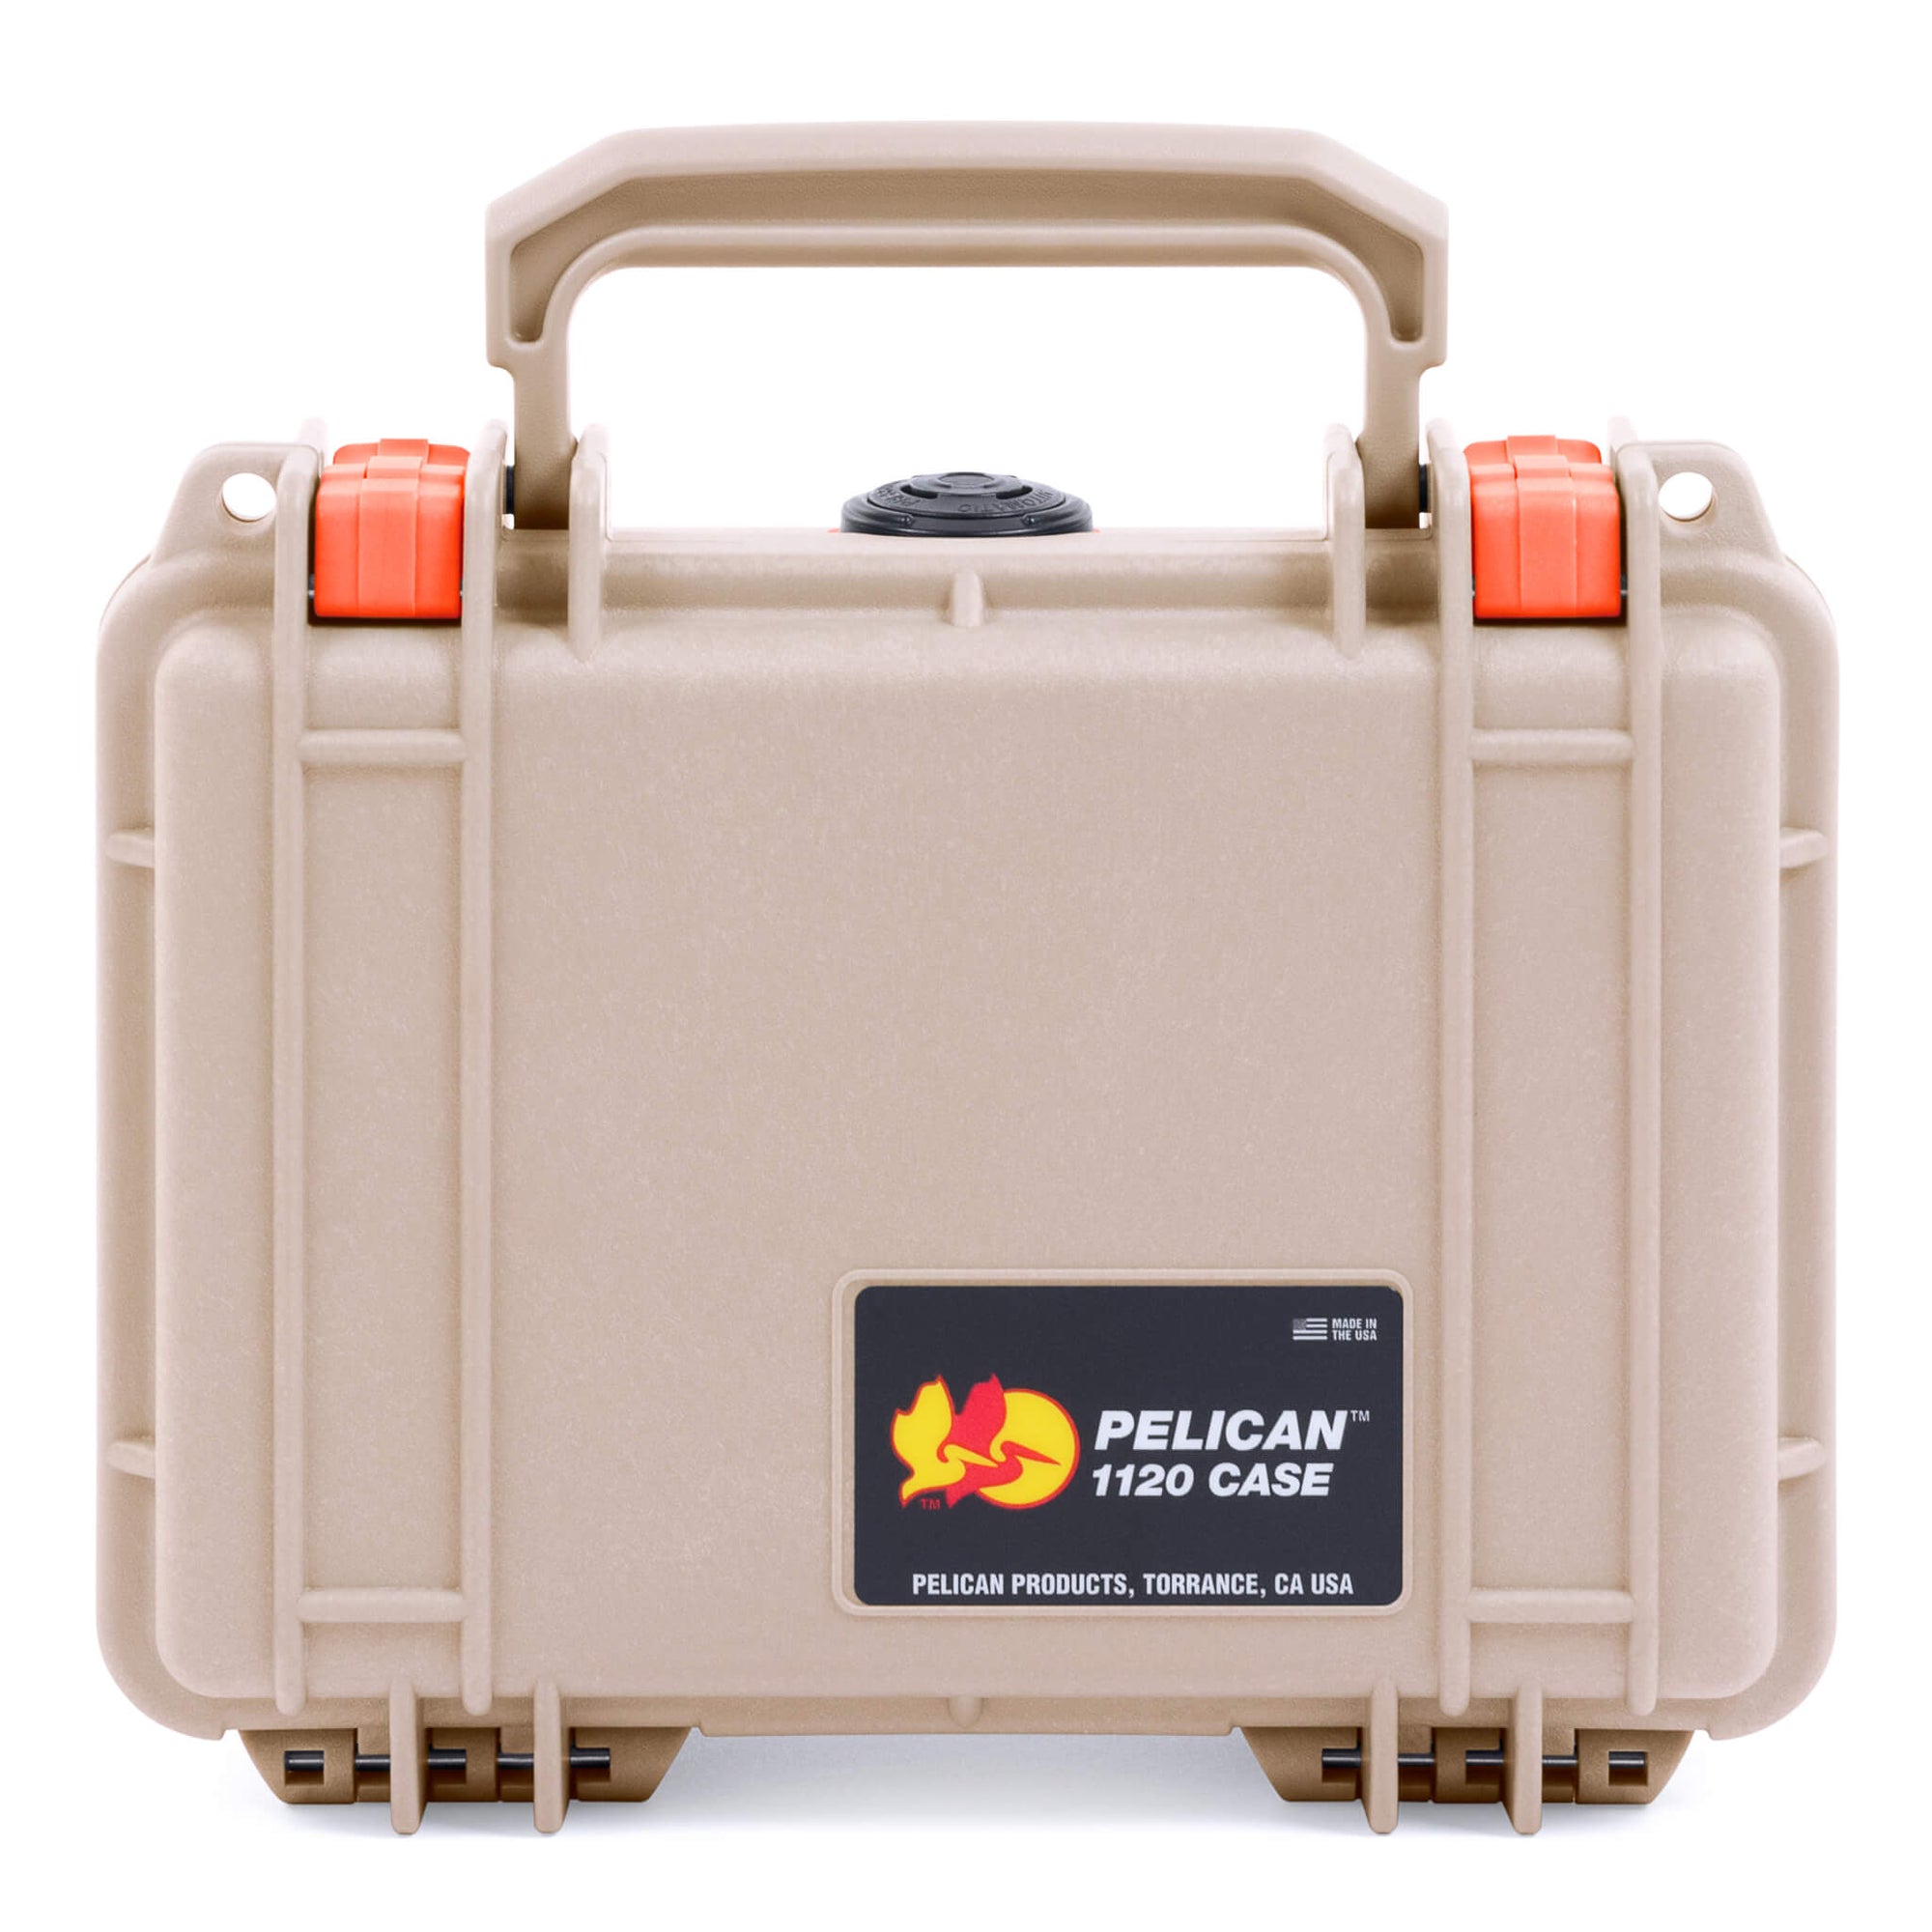 Pelican 1120 Case, Desert Tan with Orange Latches ColorCase 